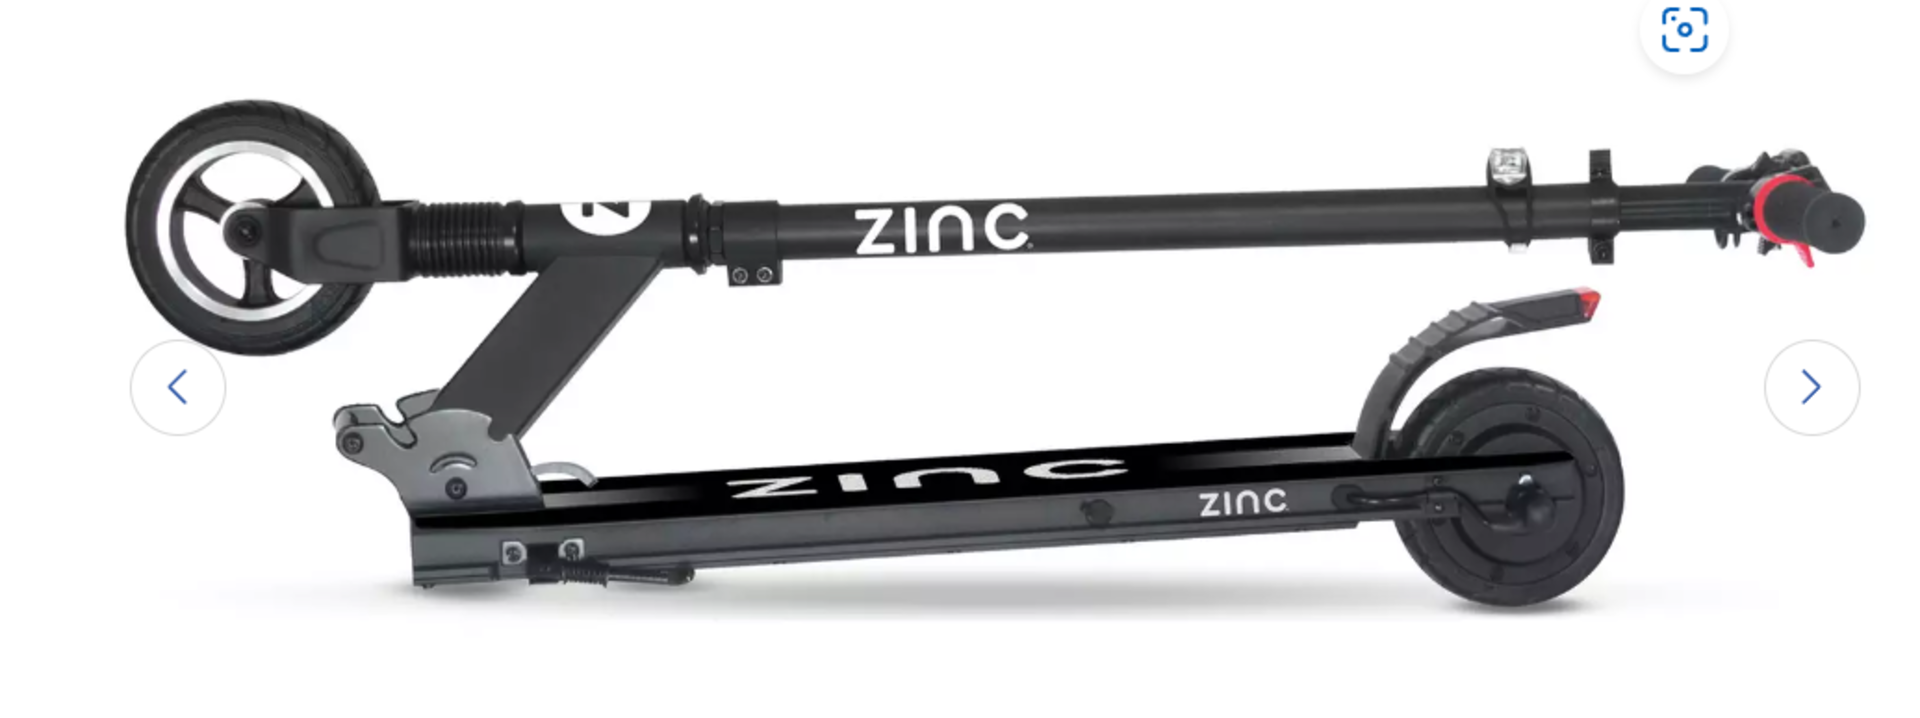 Zinc Flex Folding Electric Scooter. RRP £290.00. Introducing the Zinc Folding Electric Flex Scooter. - Image 2 of 3